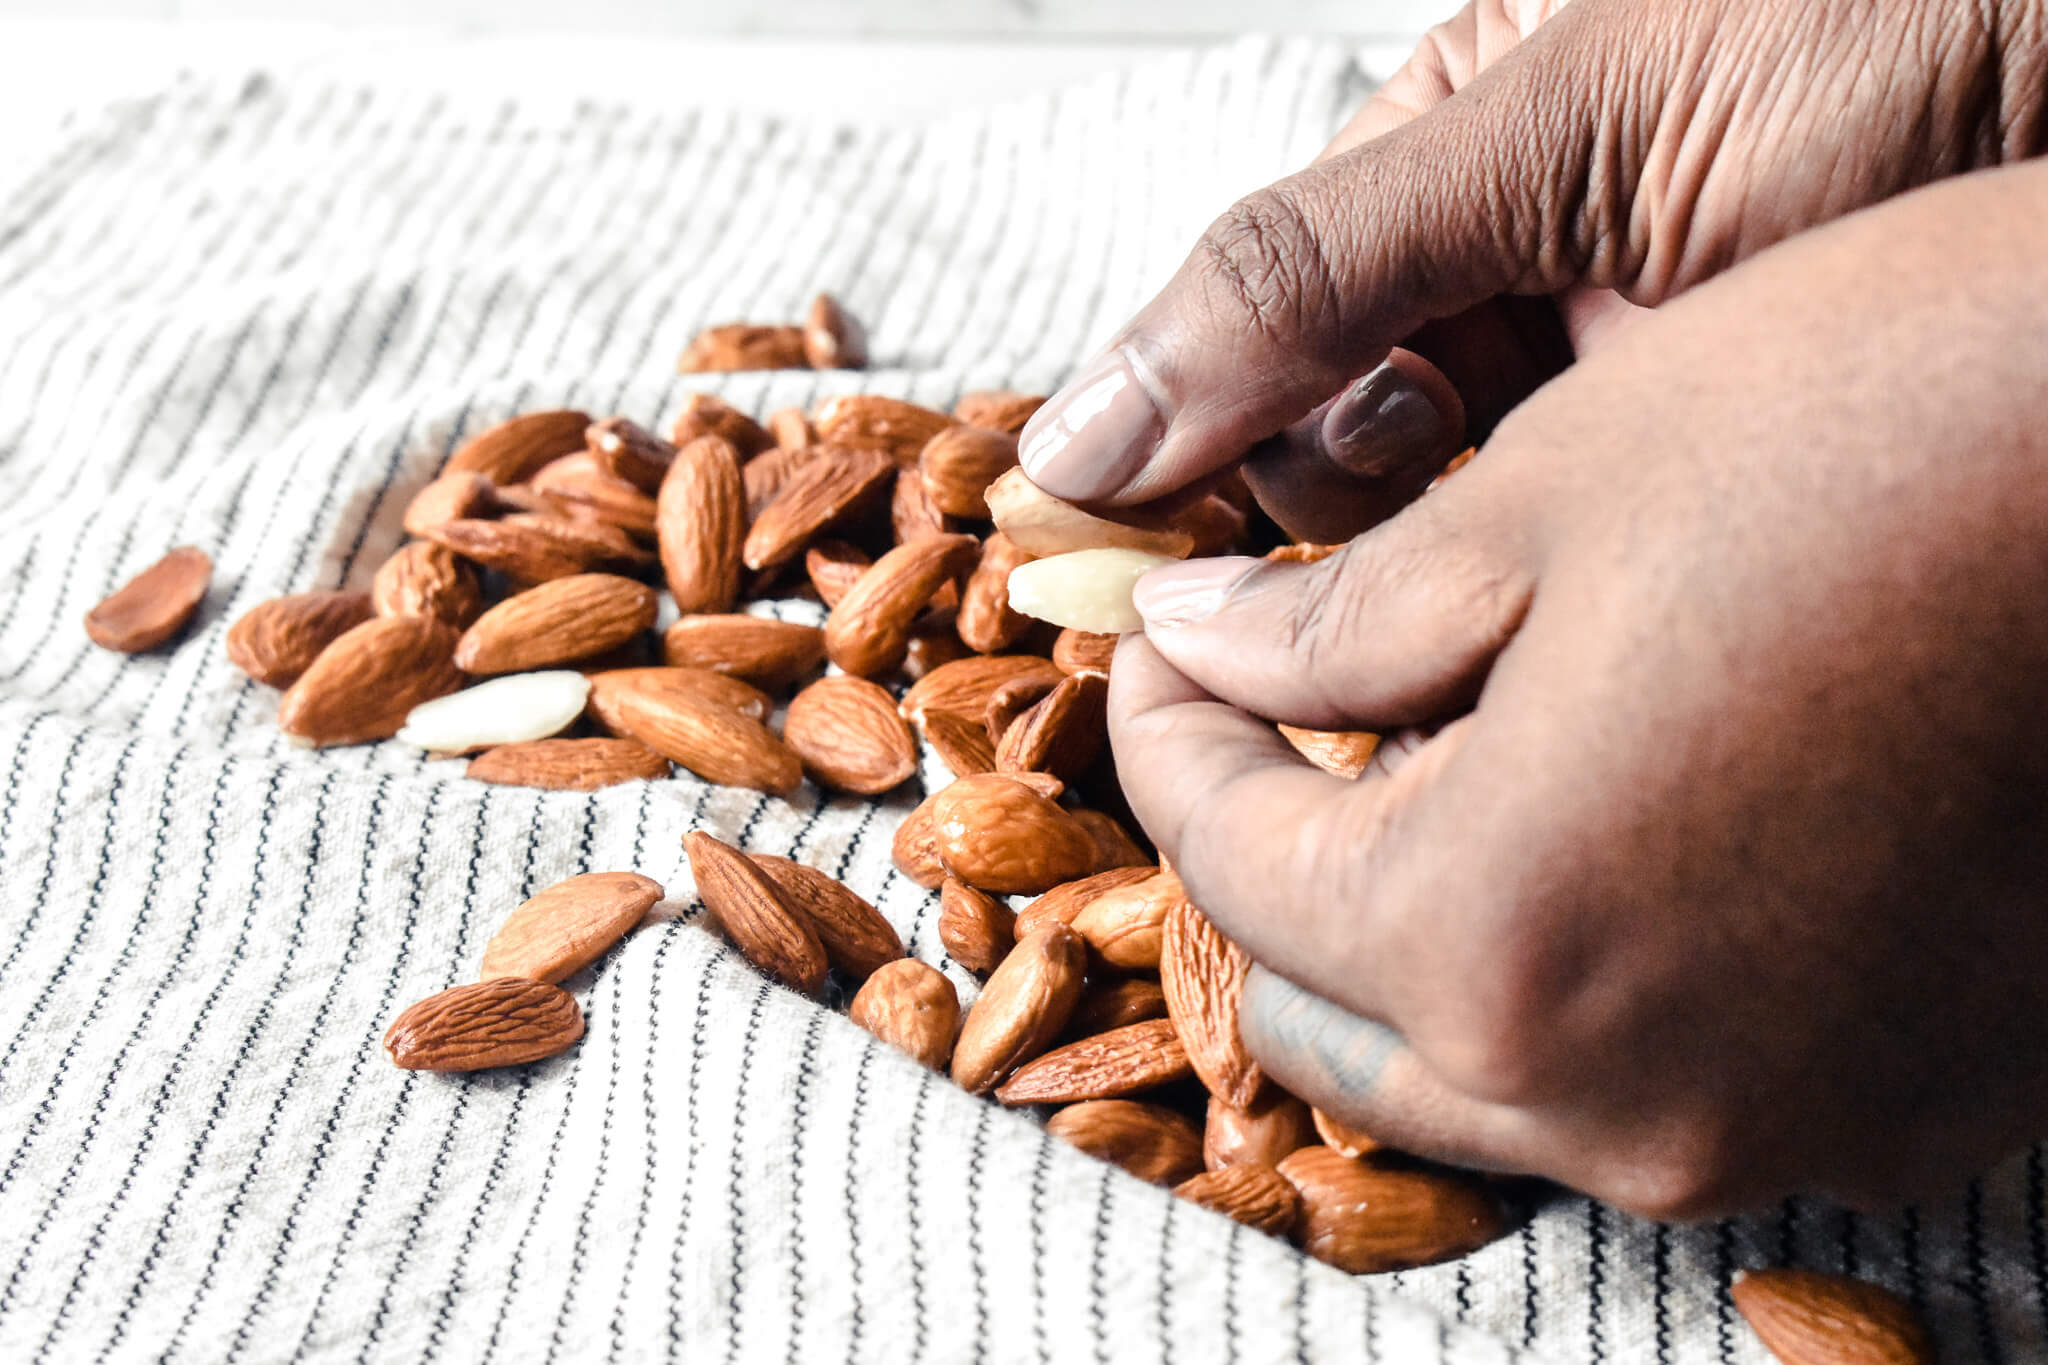 peeling almonds